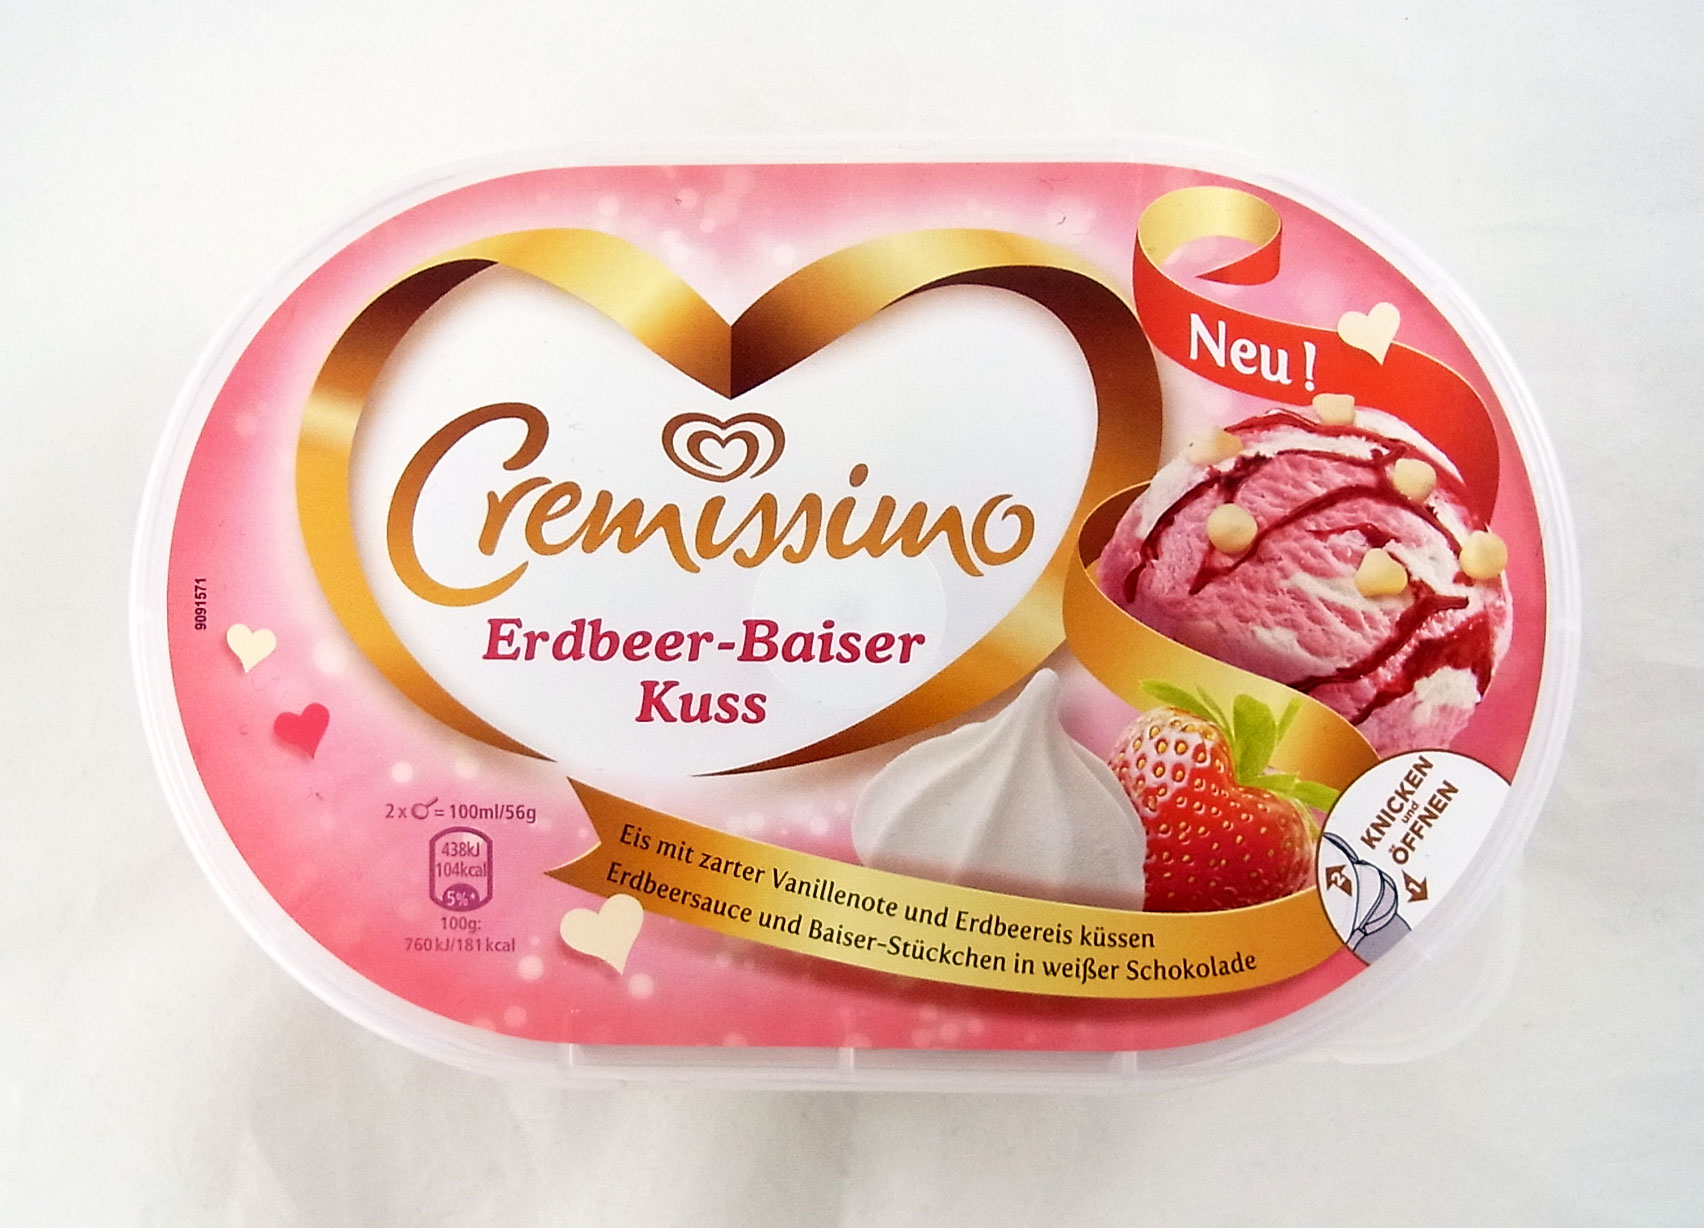 Langnese Cremissimo Erdbeer-Baiser Kuss | Lebensmittelklarheit